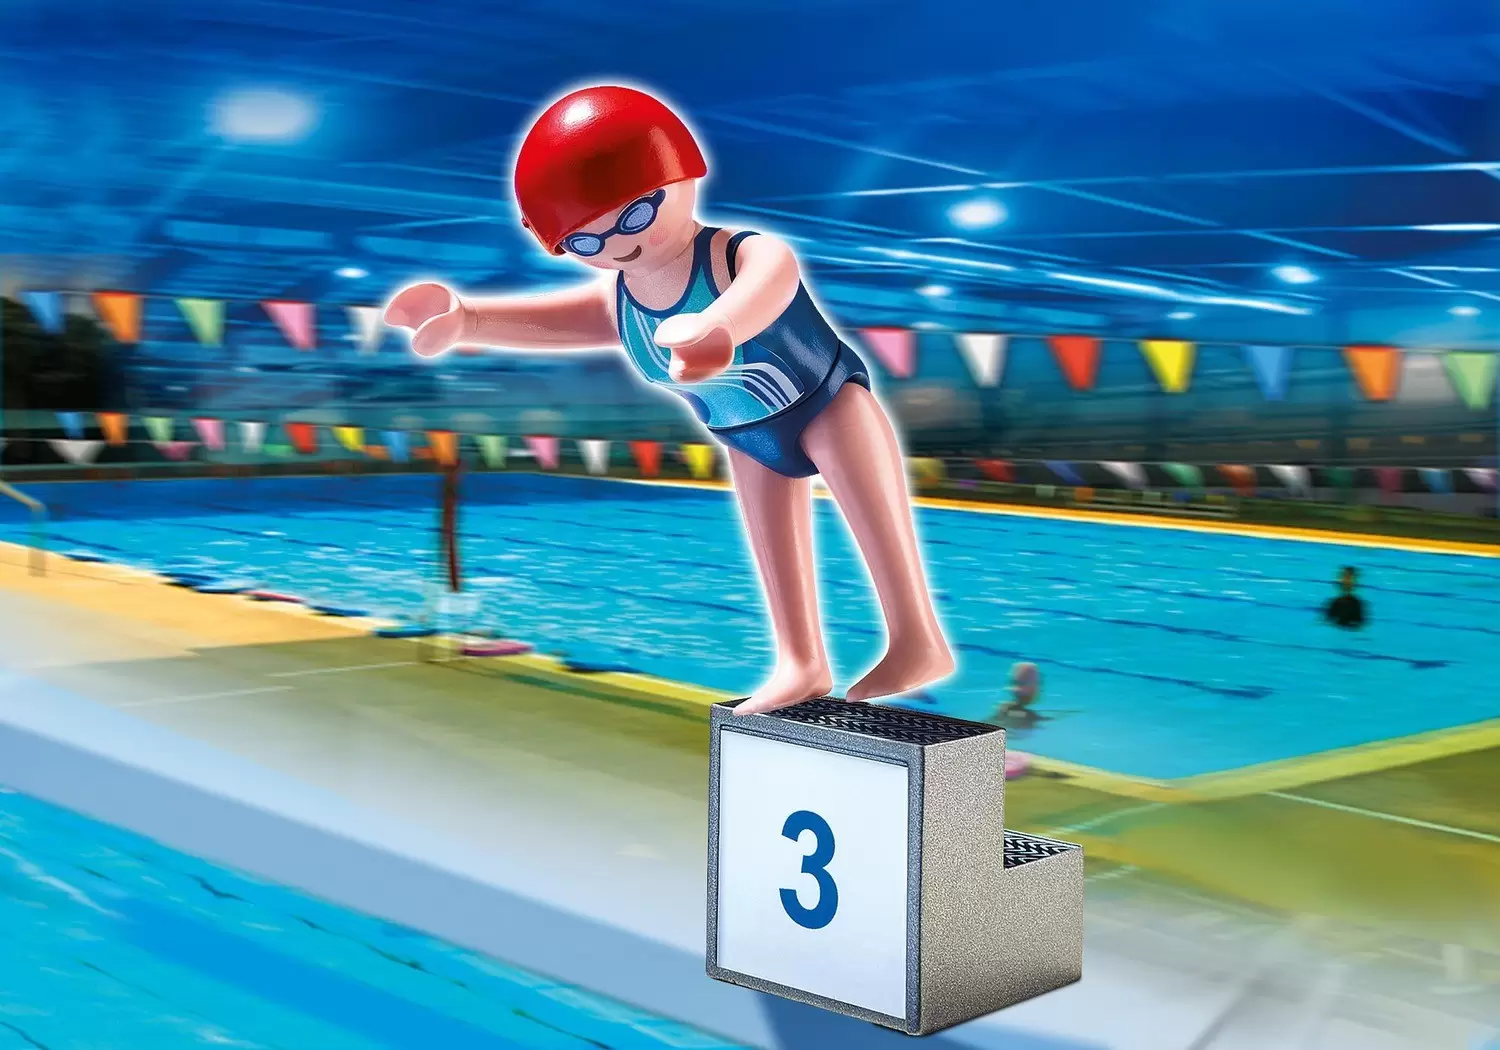 Playmobil Sports - Swimmer